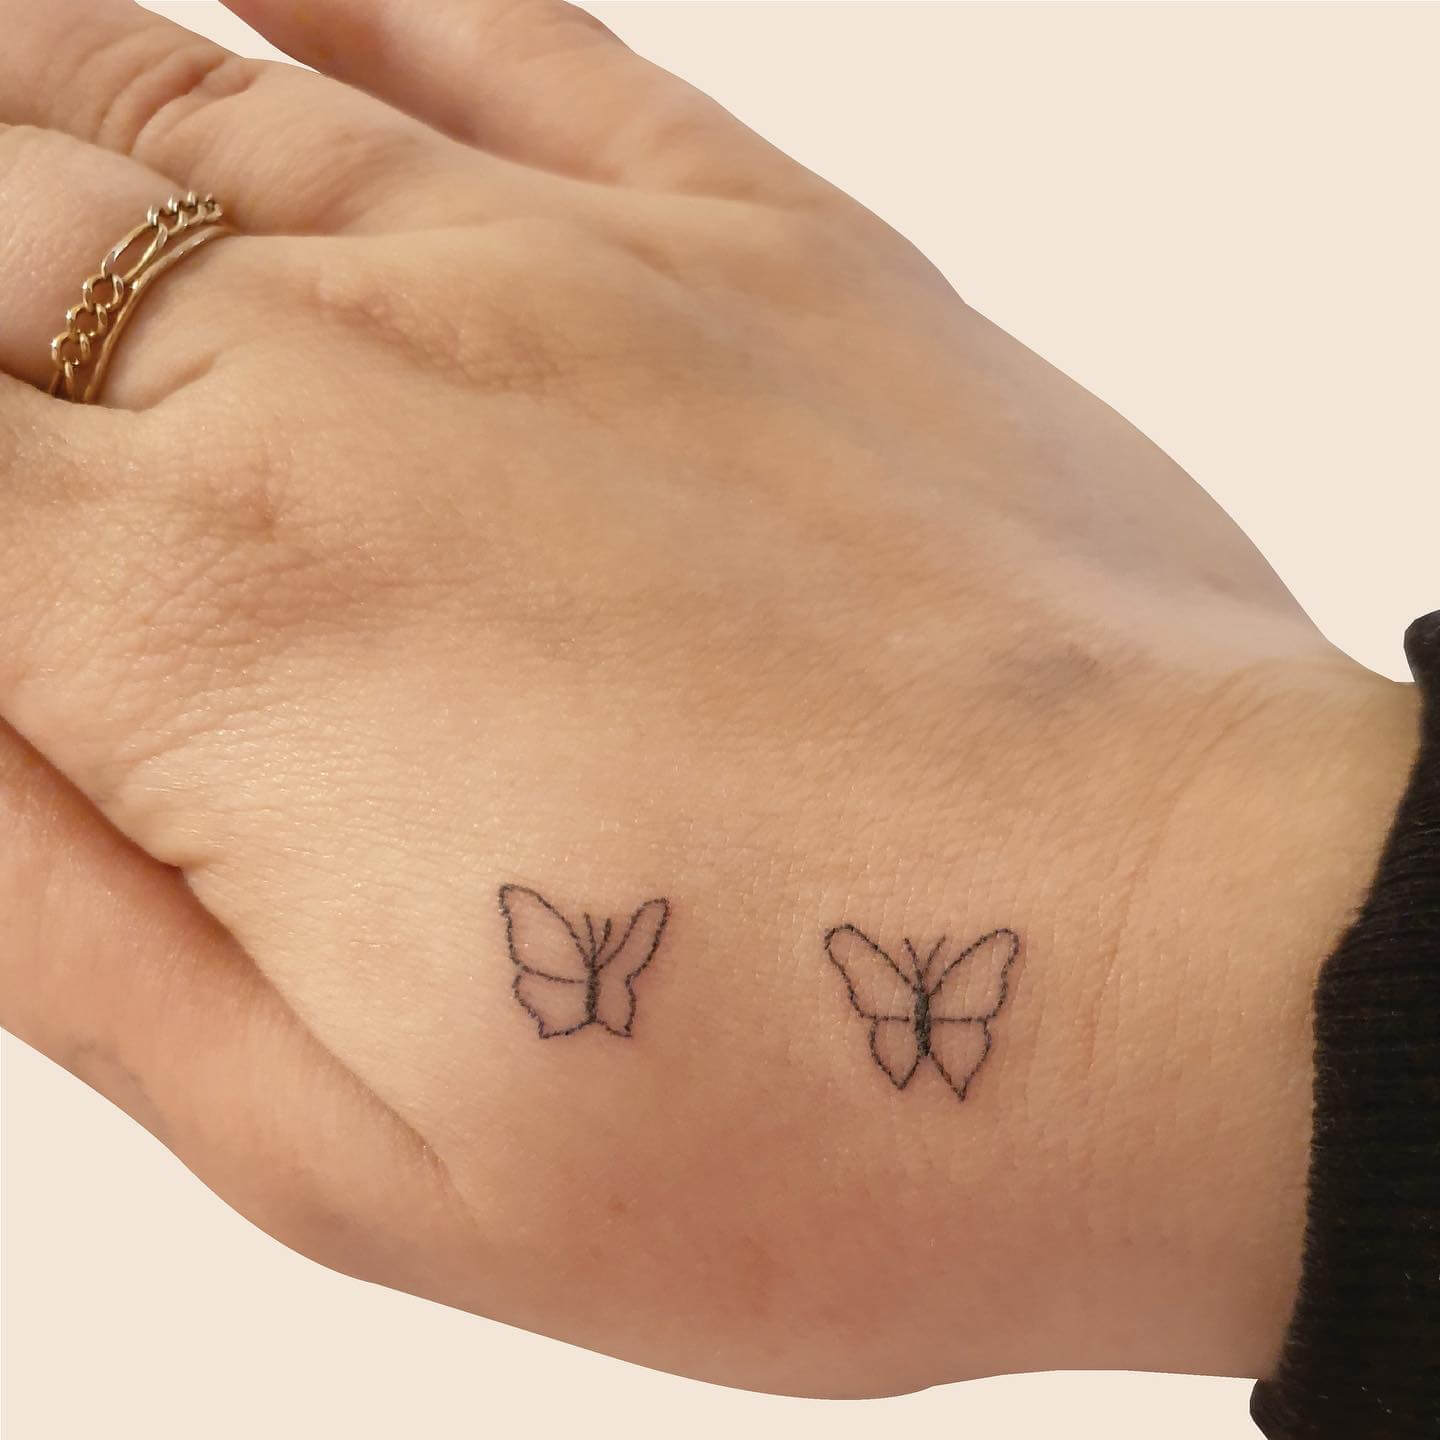 The Canvas Arts Temporary Tattoo Waterproof For Men Women Wrist Arm Hand  Shoulders Tattoo M026 Butterfly Tattoo Size 19X09 cm  Amazonin Beauty